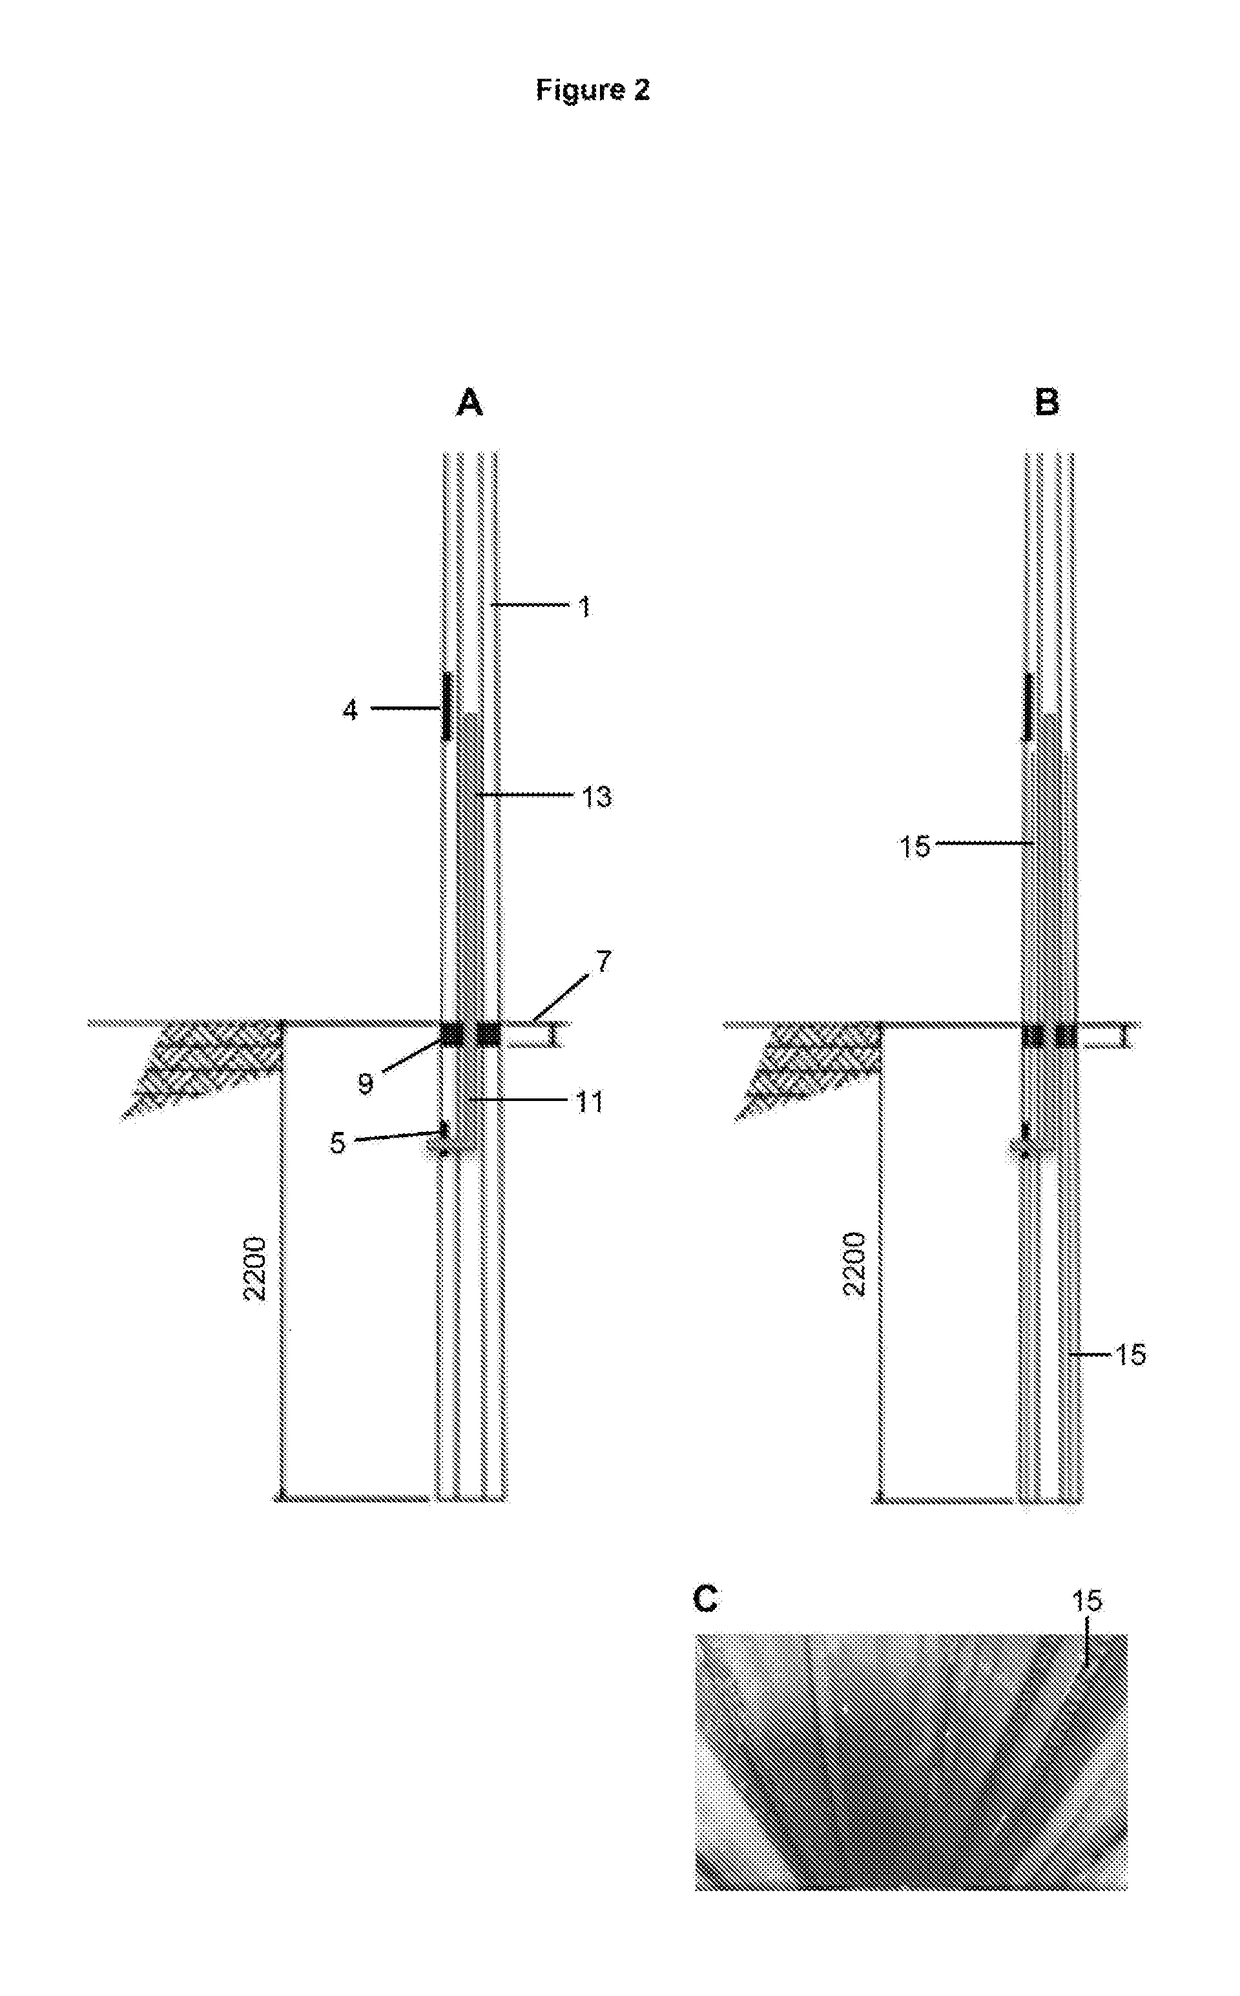 Planted pole reinforcement methods